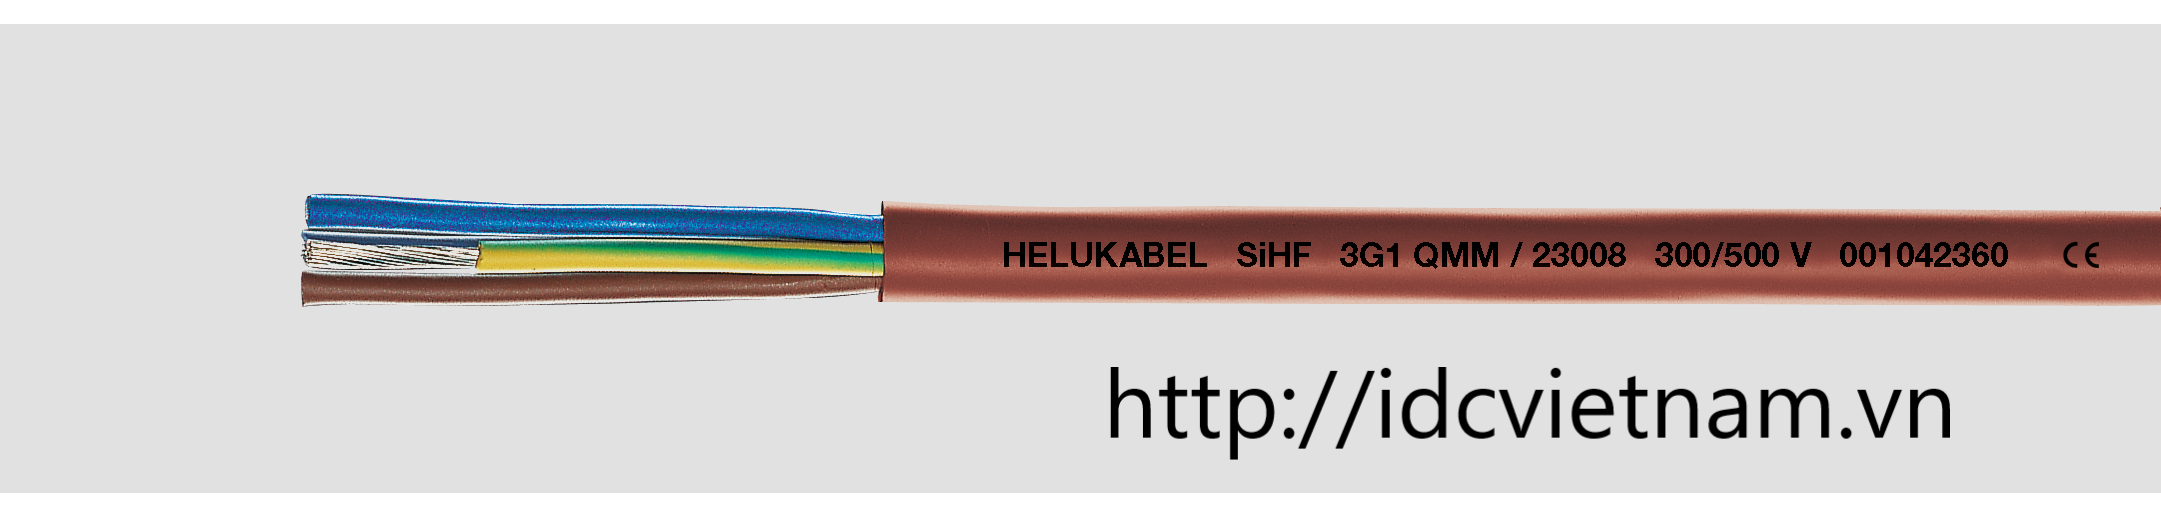 Helukabel SiHF 2x1mm2 R-BN (23007)